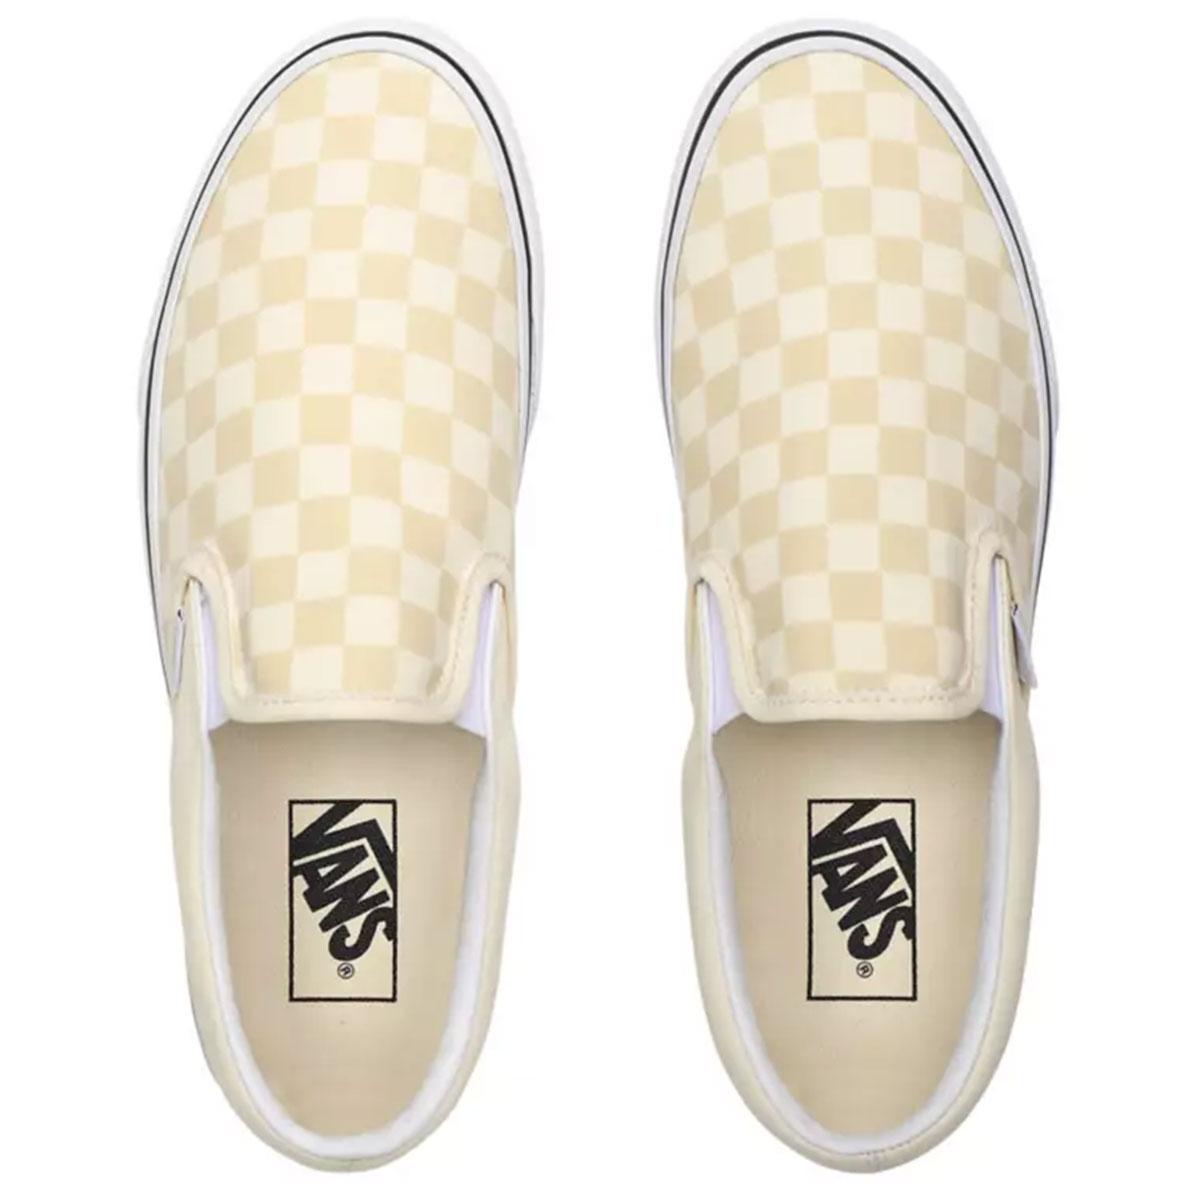 Vans Checkerboard Slip-On Skate Shoes, Classic White/True White